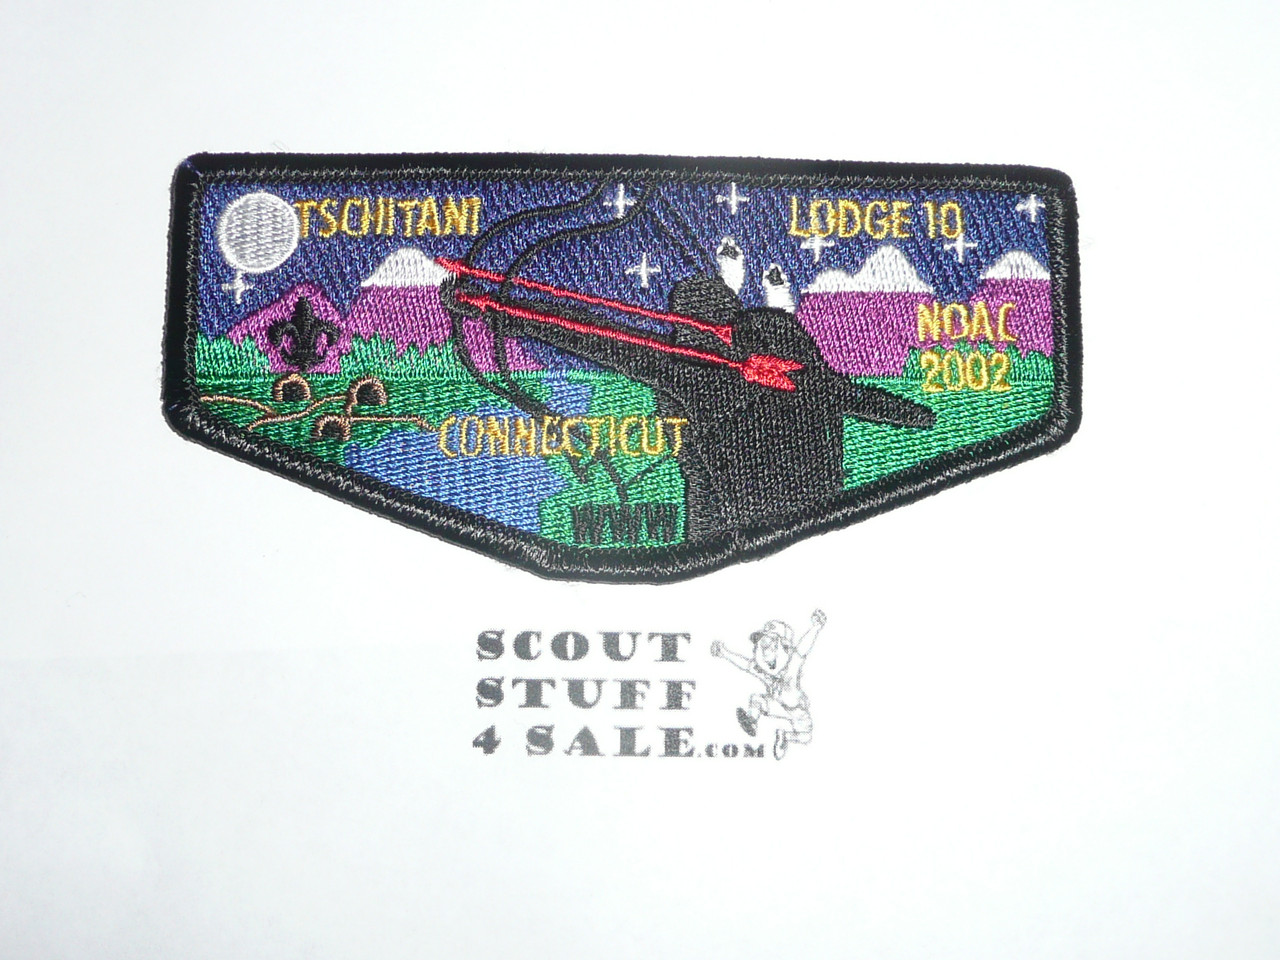 Order of the Arrow Lodge #10 Tschitani s22 Flap Patch, 2002 NOAC